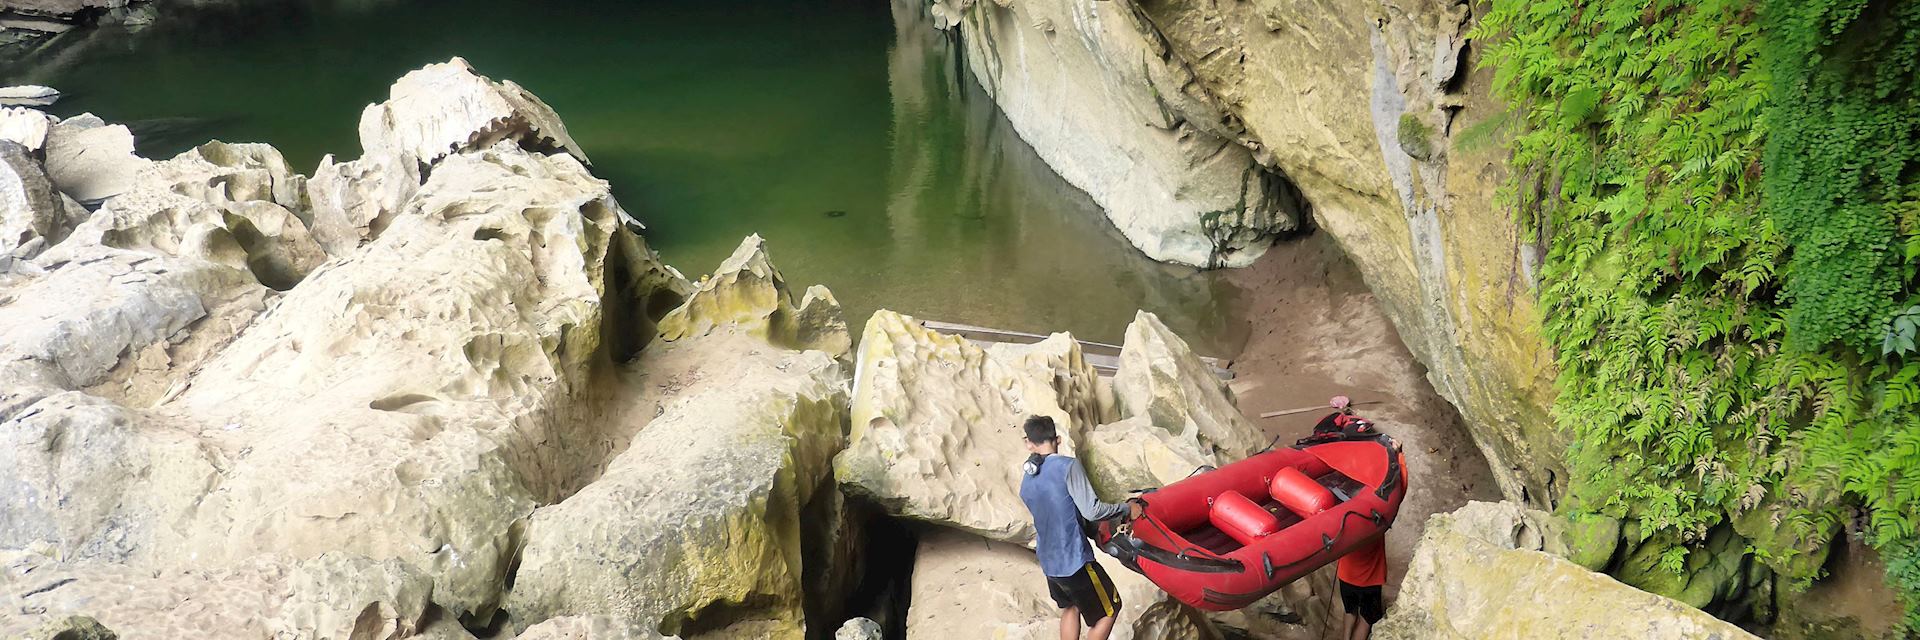 Exploring Xe Bang Fai cave